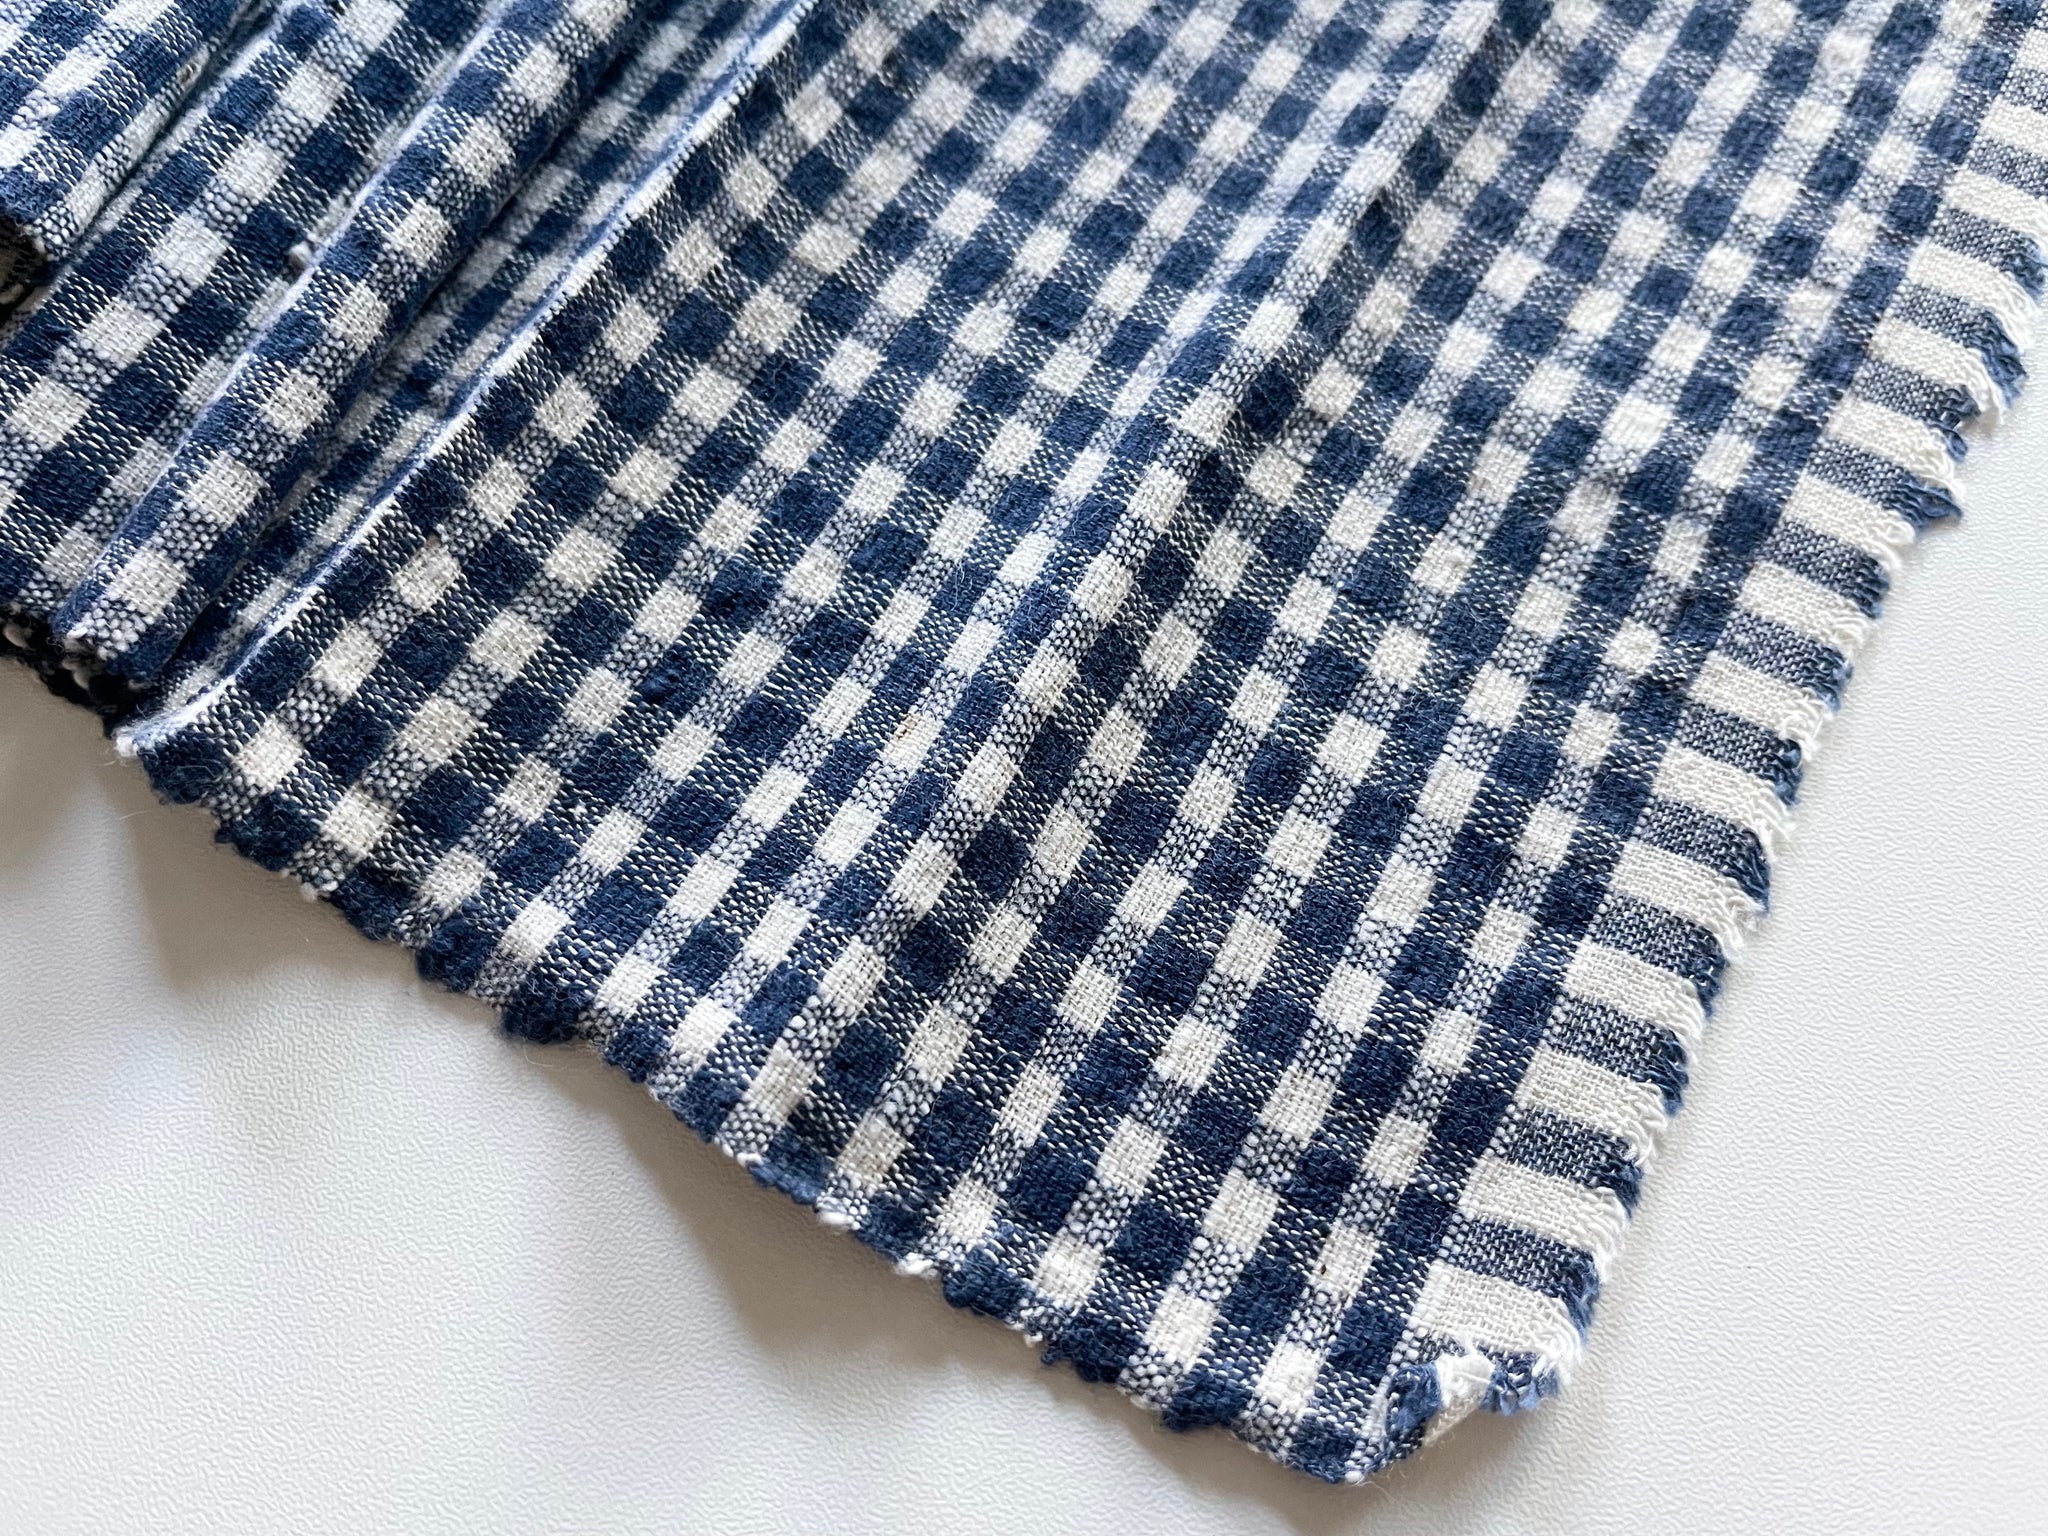 Vintage Handwoven Cotton Cloth - Navy Check